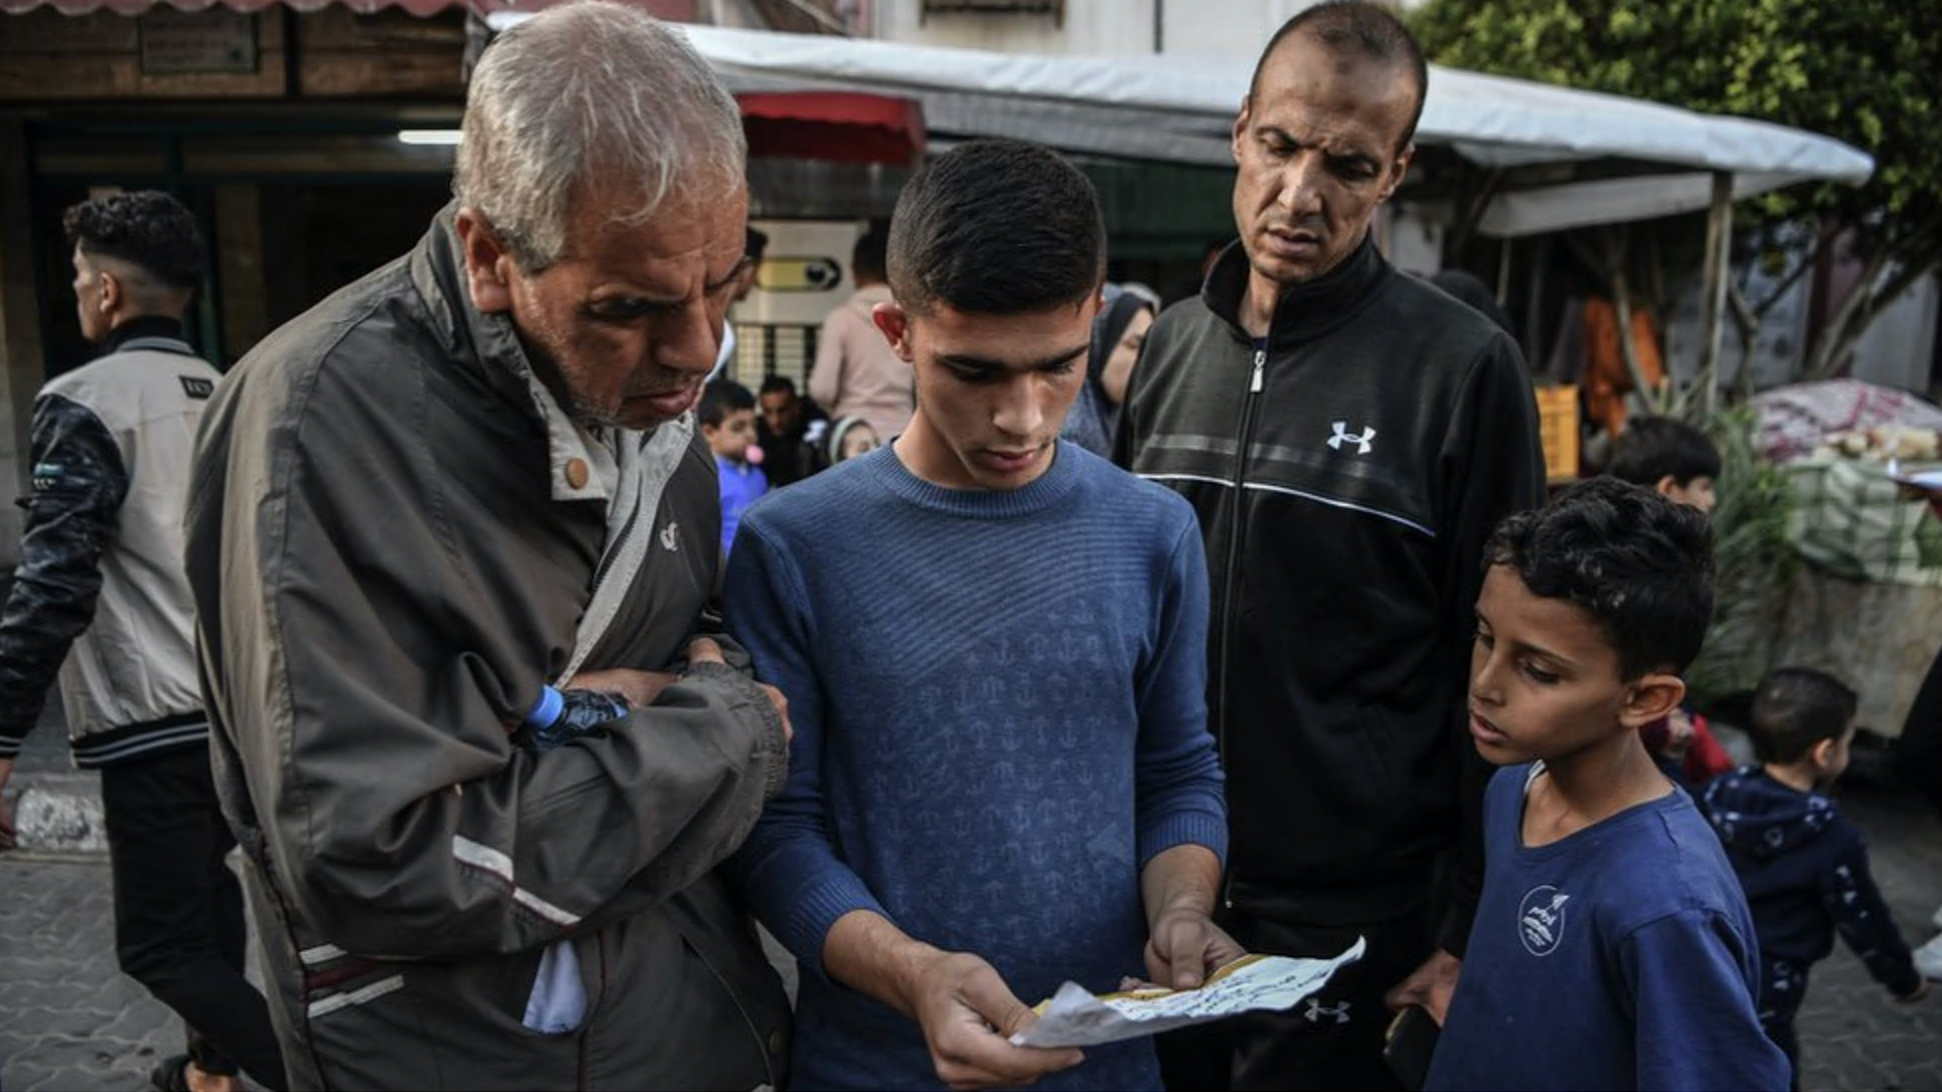 IDF의 대피 경고가 담긴 전단지를 보고 있는 가자 지구 주민들